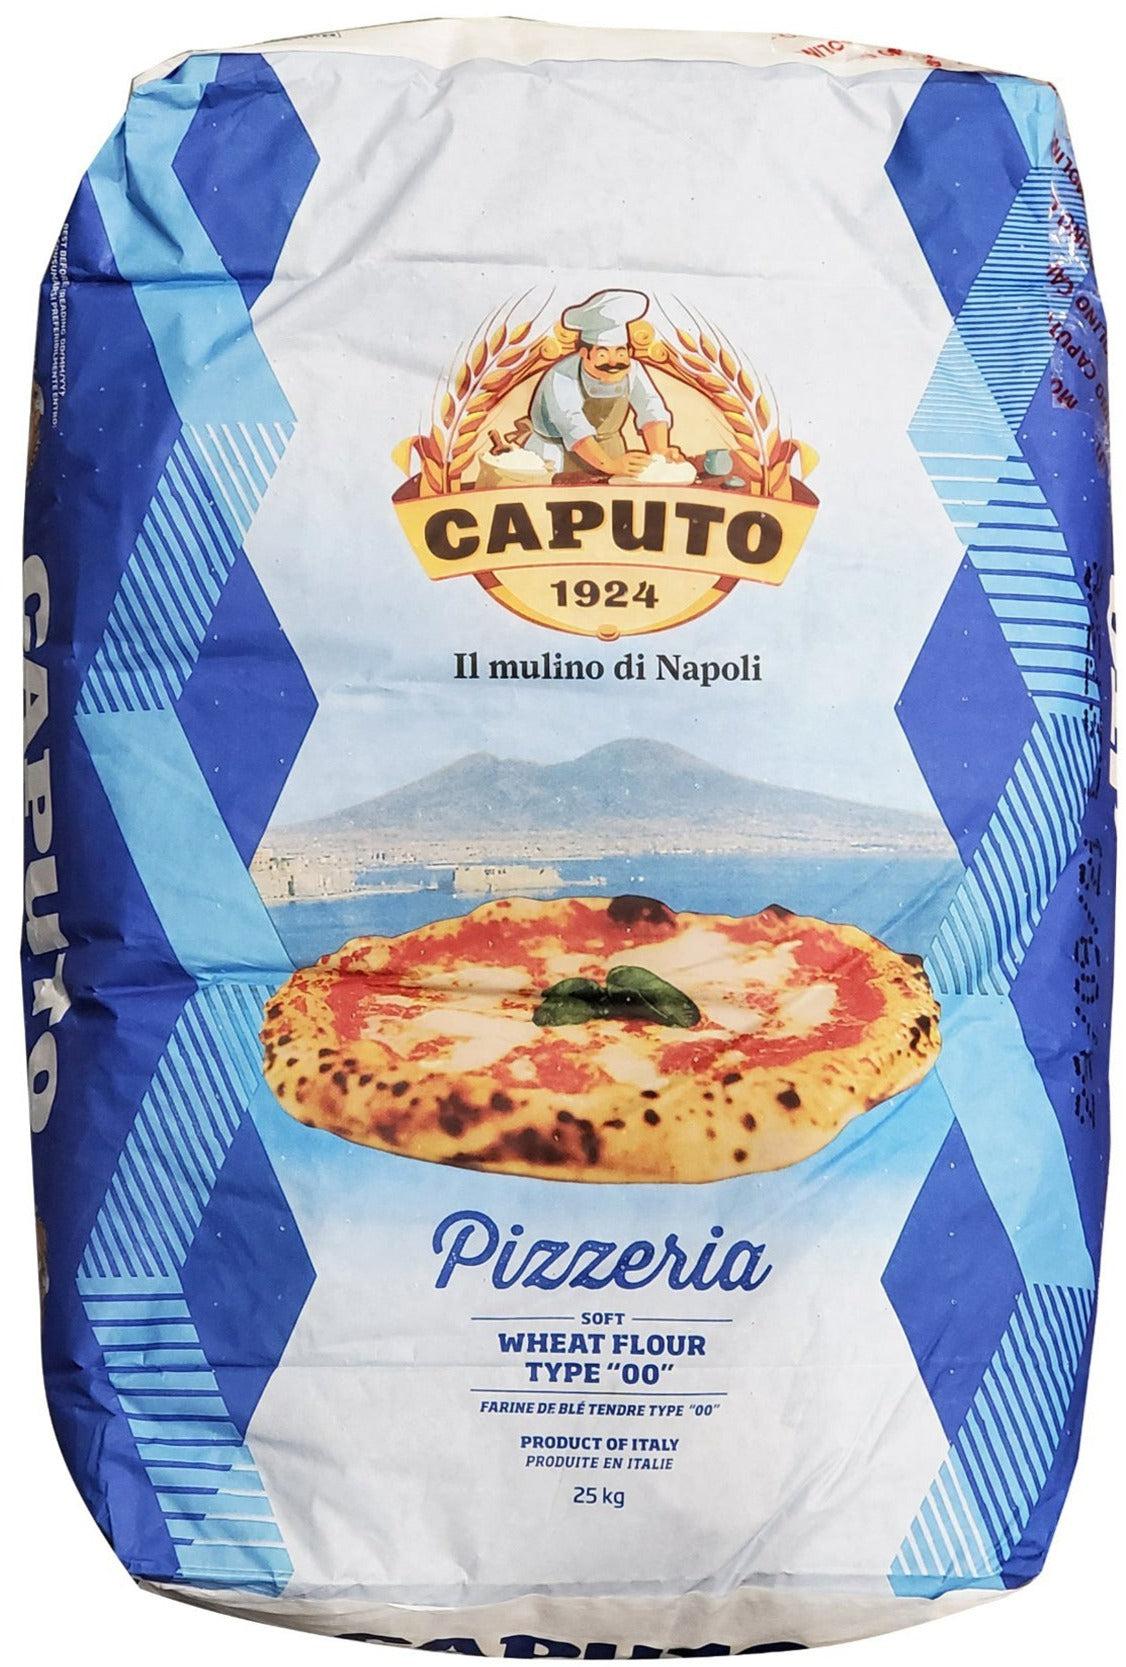 Antimo Caputo Pizzeria Flour 55 LB Blue Bulk Bag - Italian Double Zero 00 -  All Natural Wheat for Authentic Pizza Dough, Bread, & Pasta